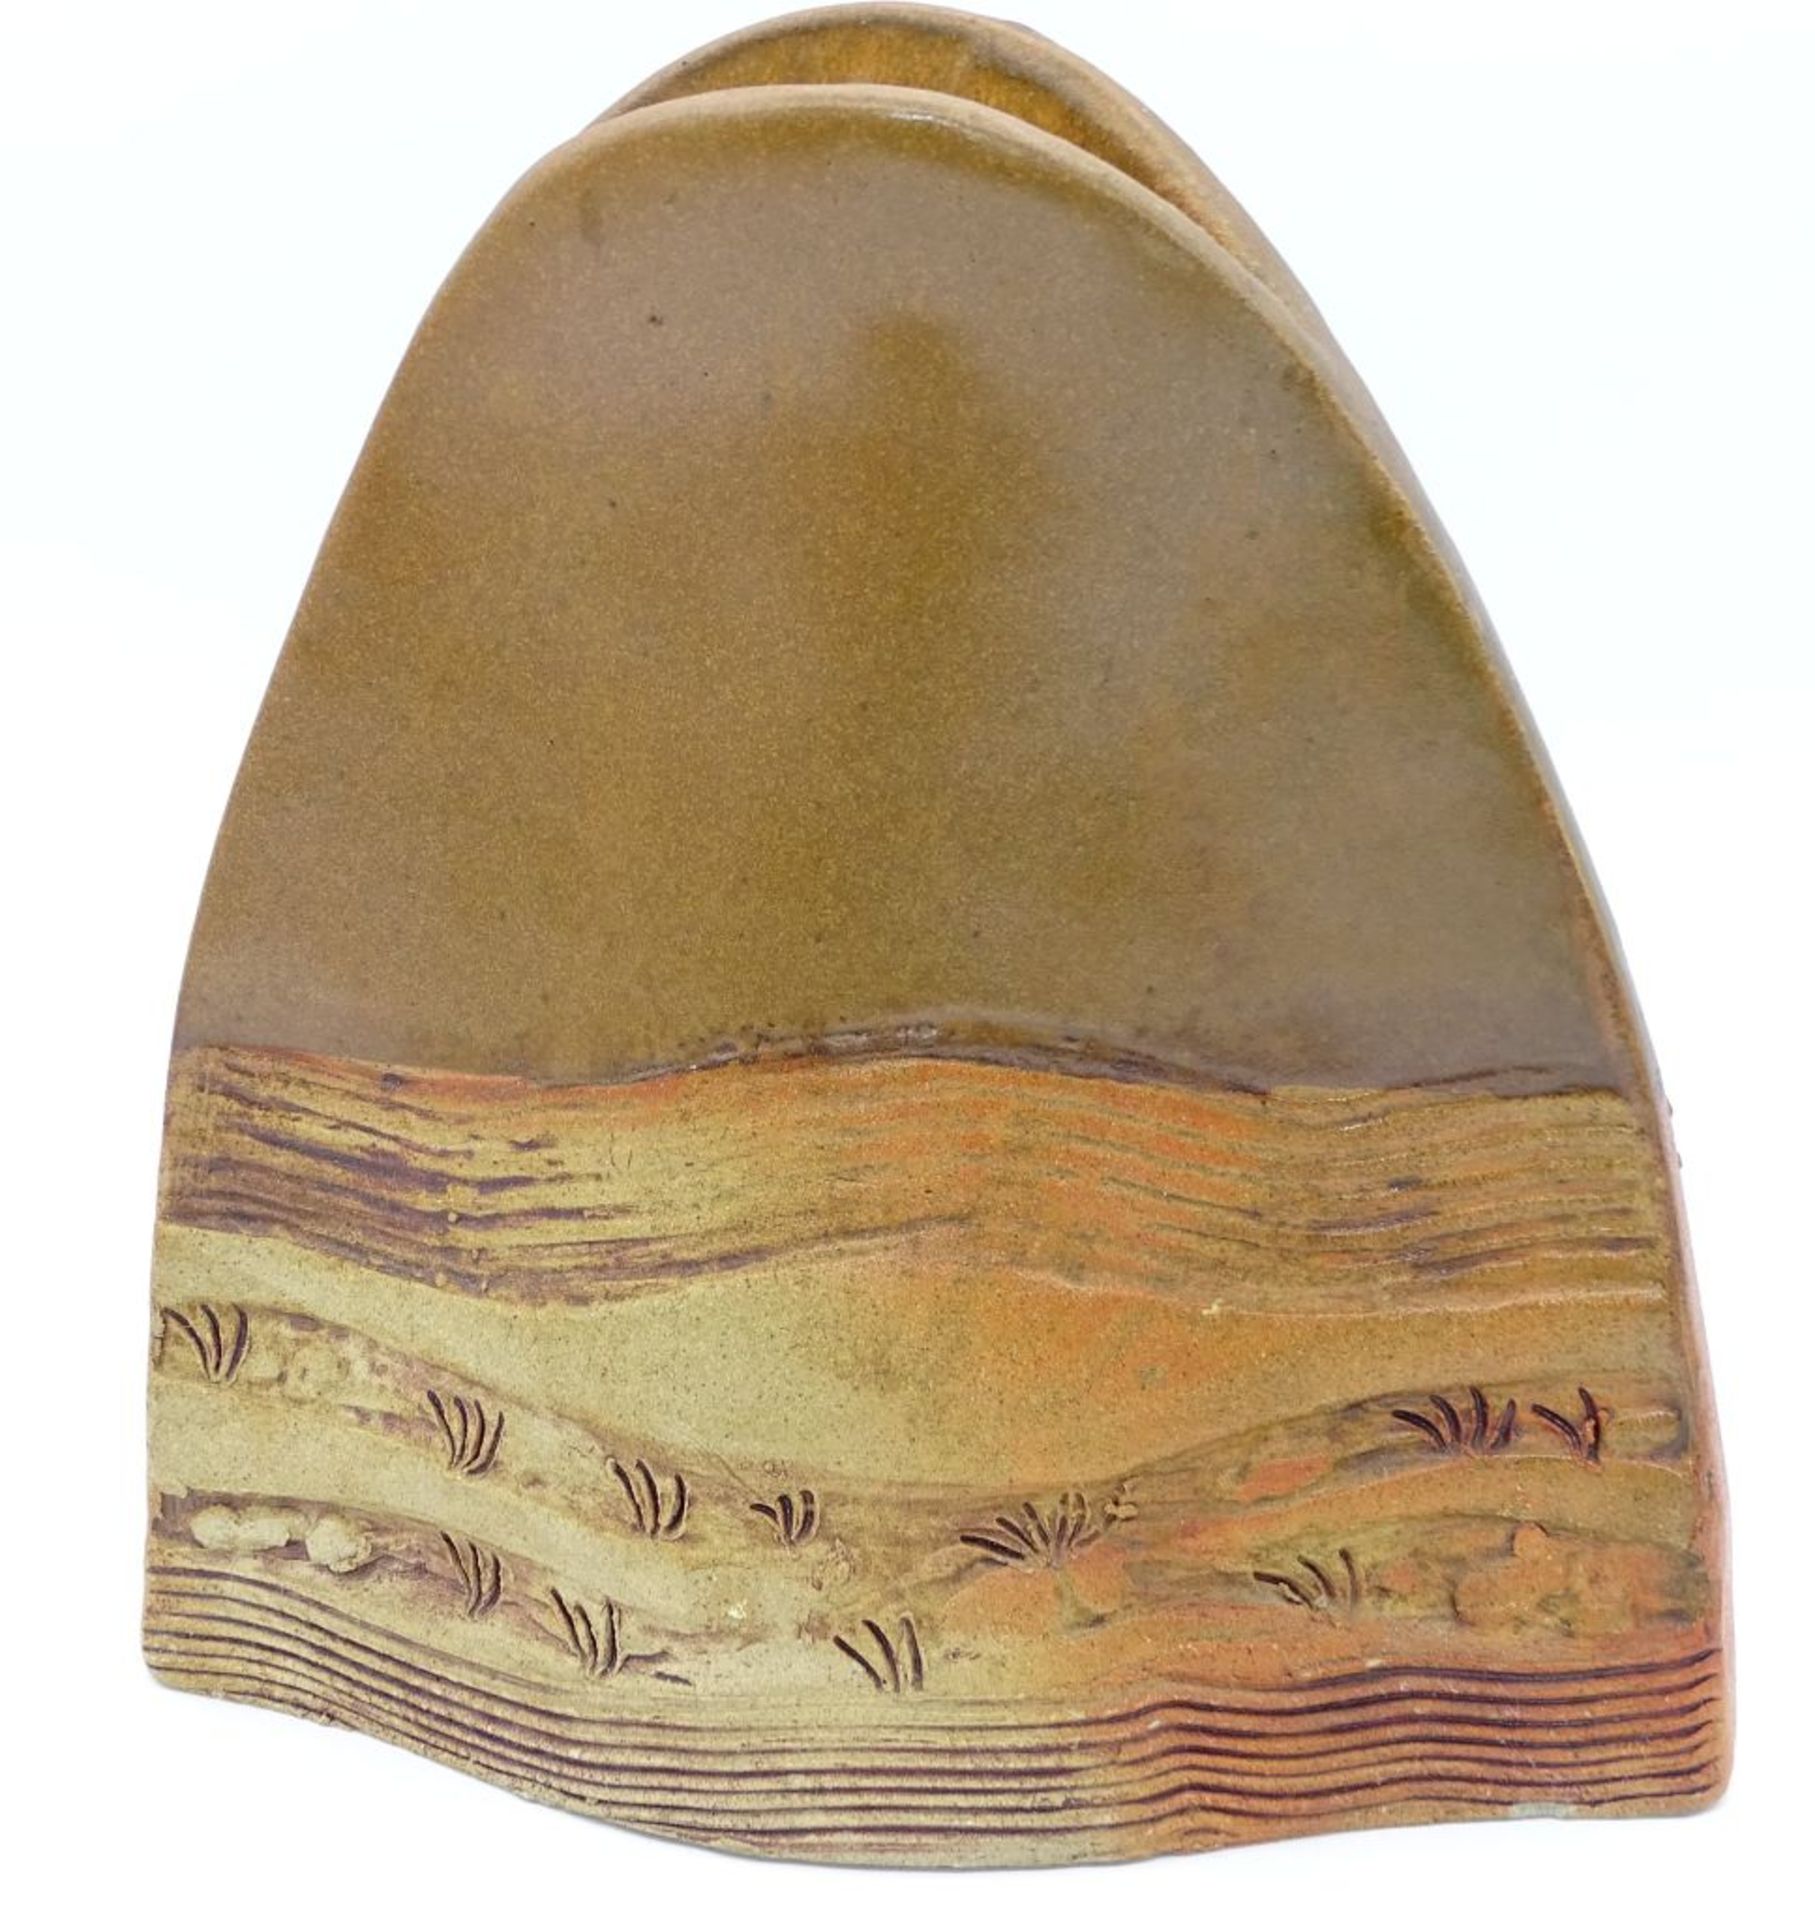 Keramik Vase, "Alka",braunfarbig,H-20cm, b-18cm - Bild 2 aus 3